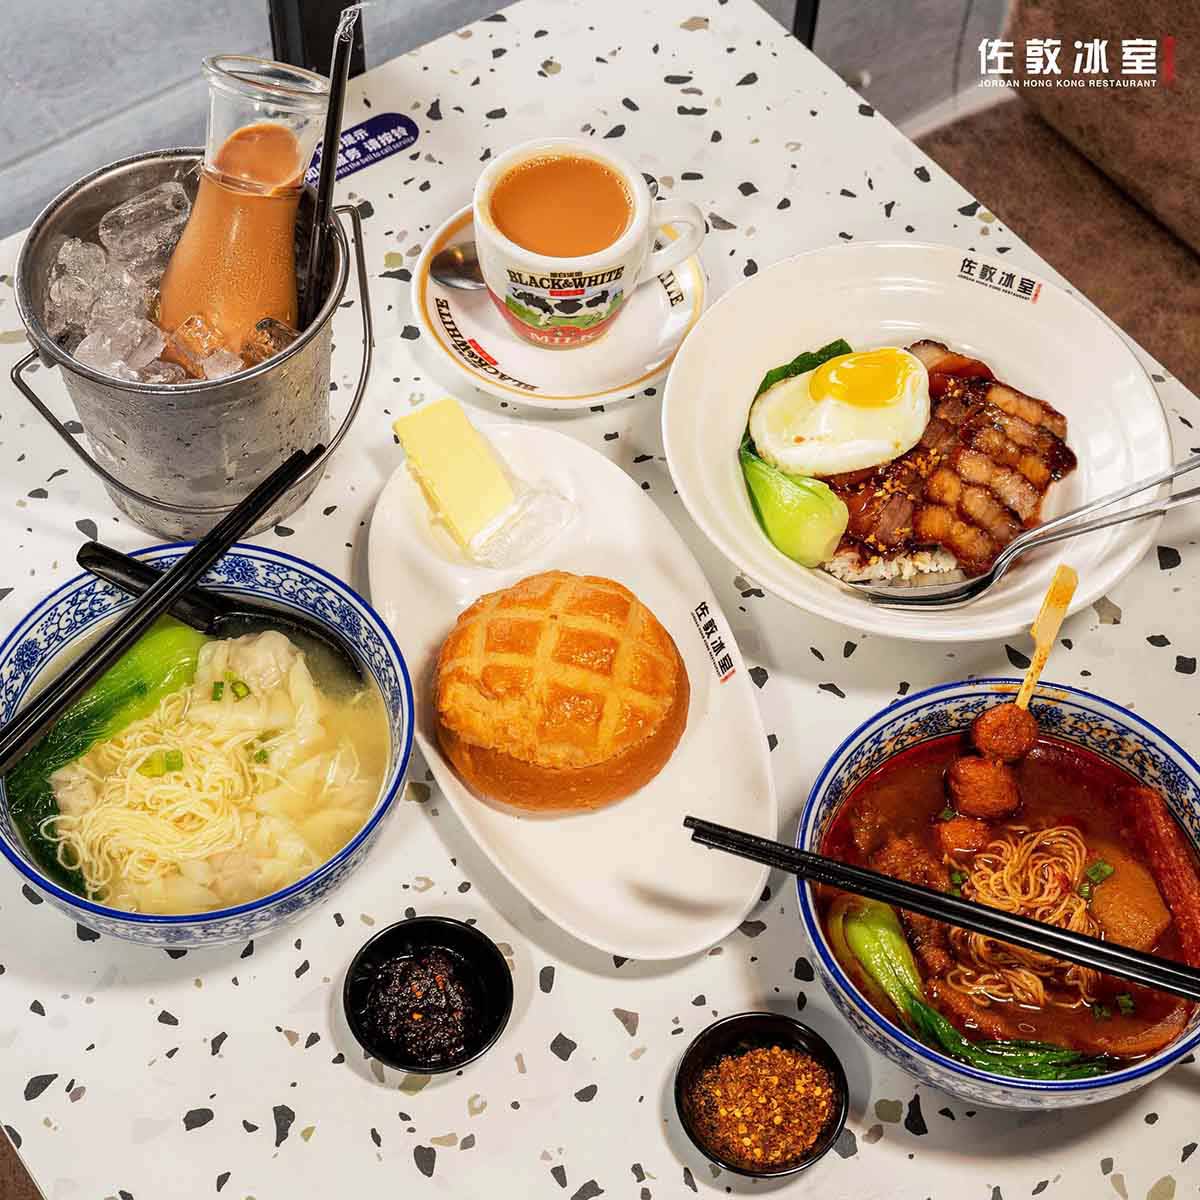 Jordan Hong Kong Restaurant - Various dishes